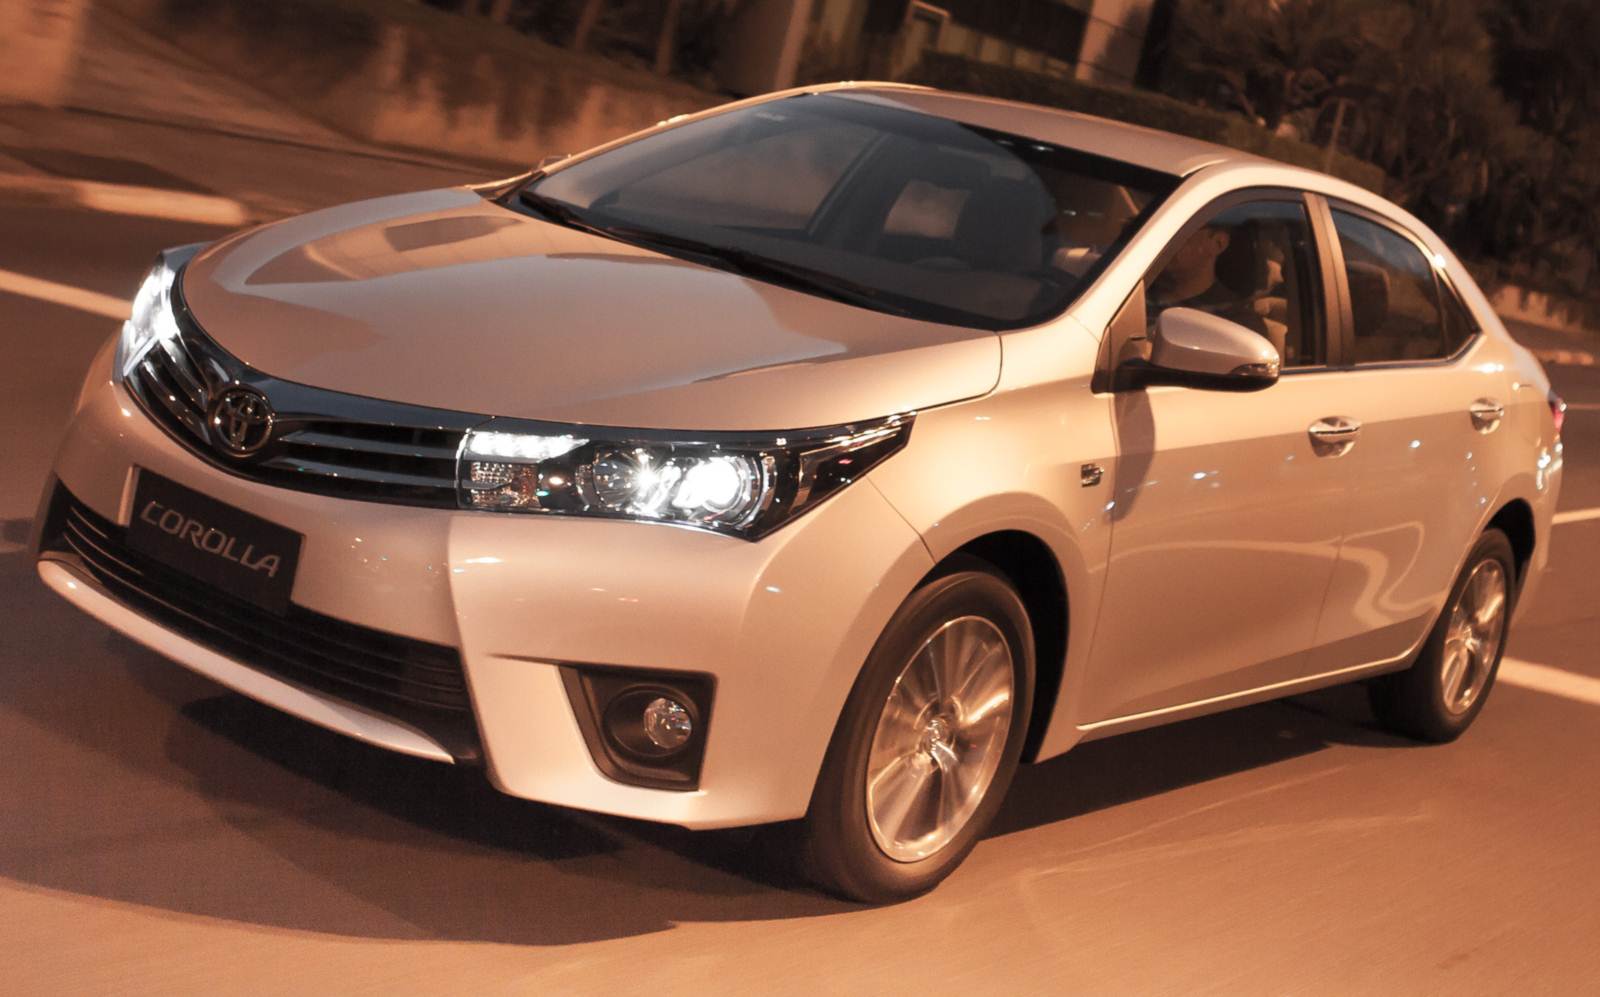 Novo Toyota Corollla 2015 - Altis